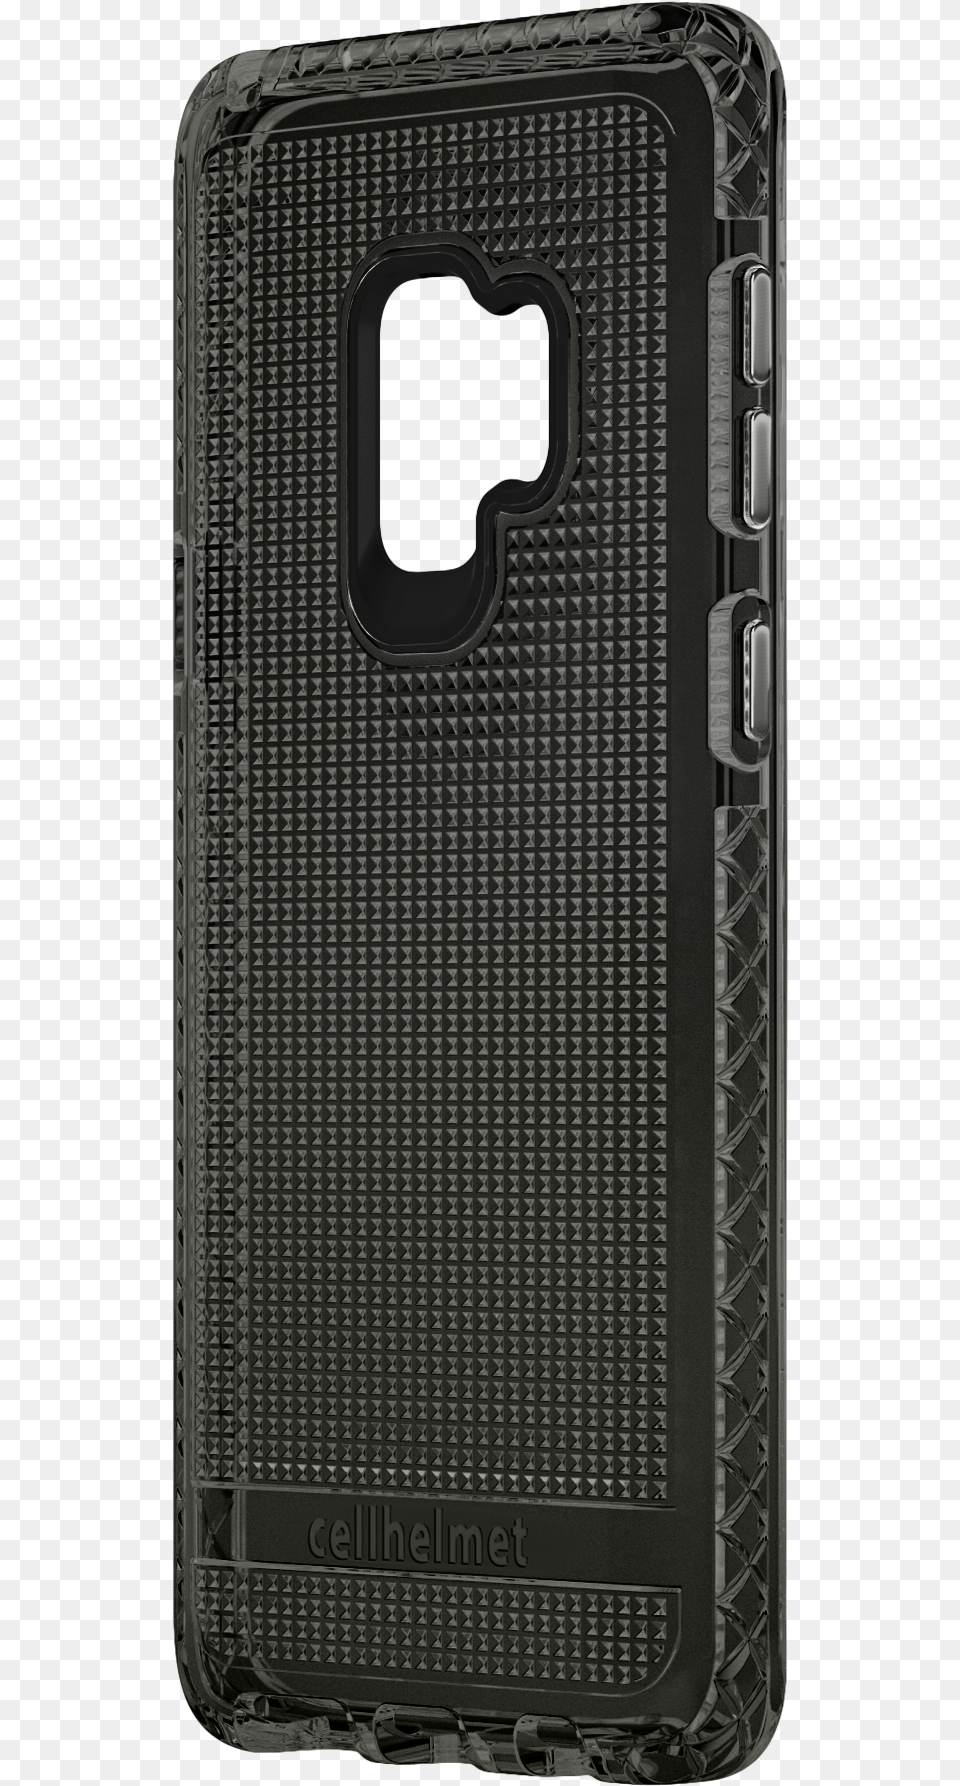 Cellhelmet Altitude X Black Case For Samsung Galaxy Mobile Phone Case, Electronics, Mobile Phone Png Image